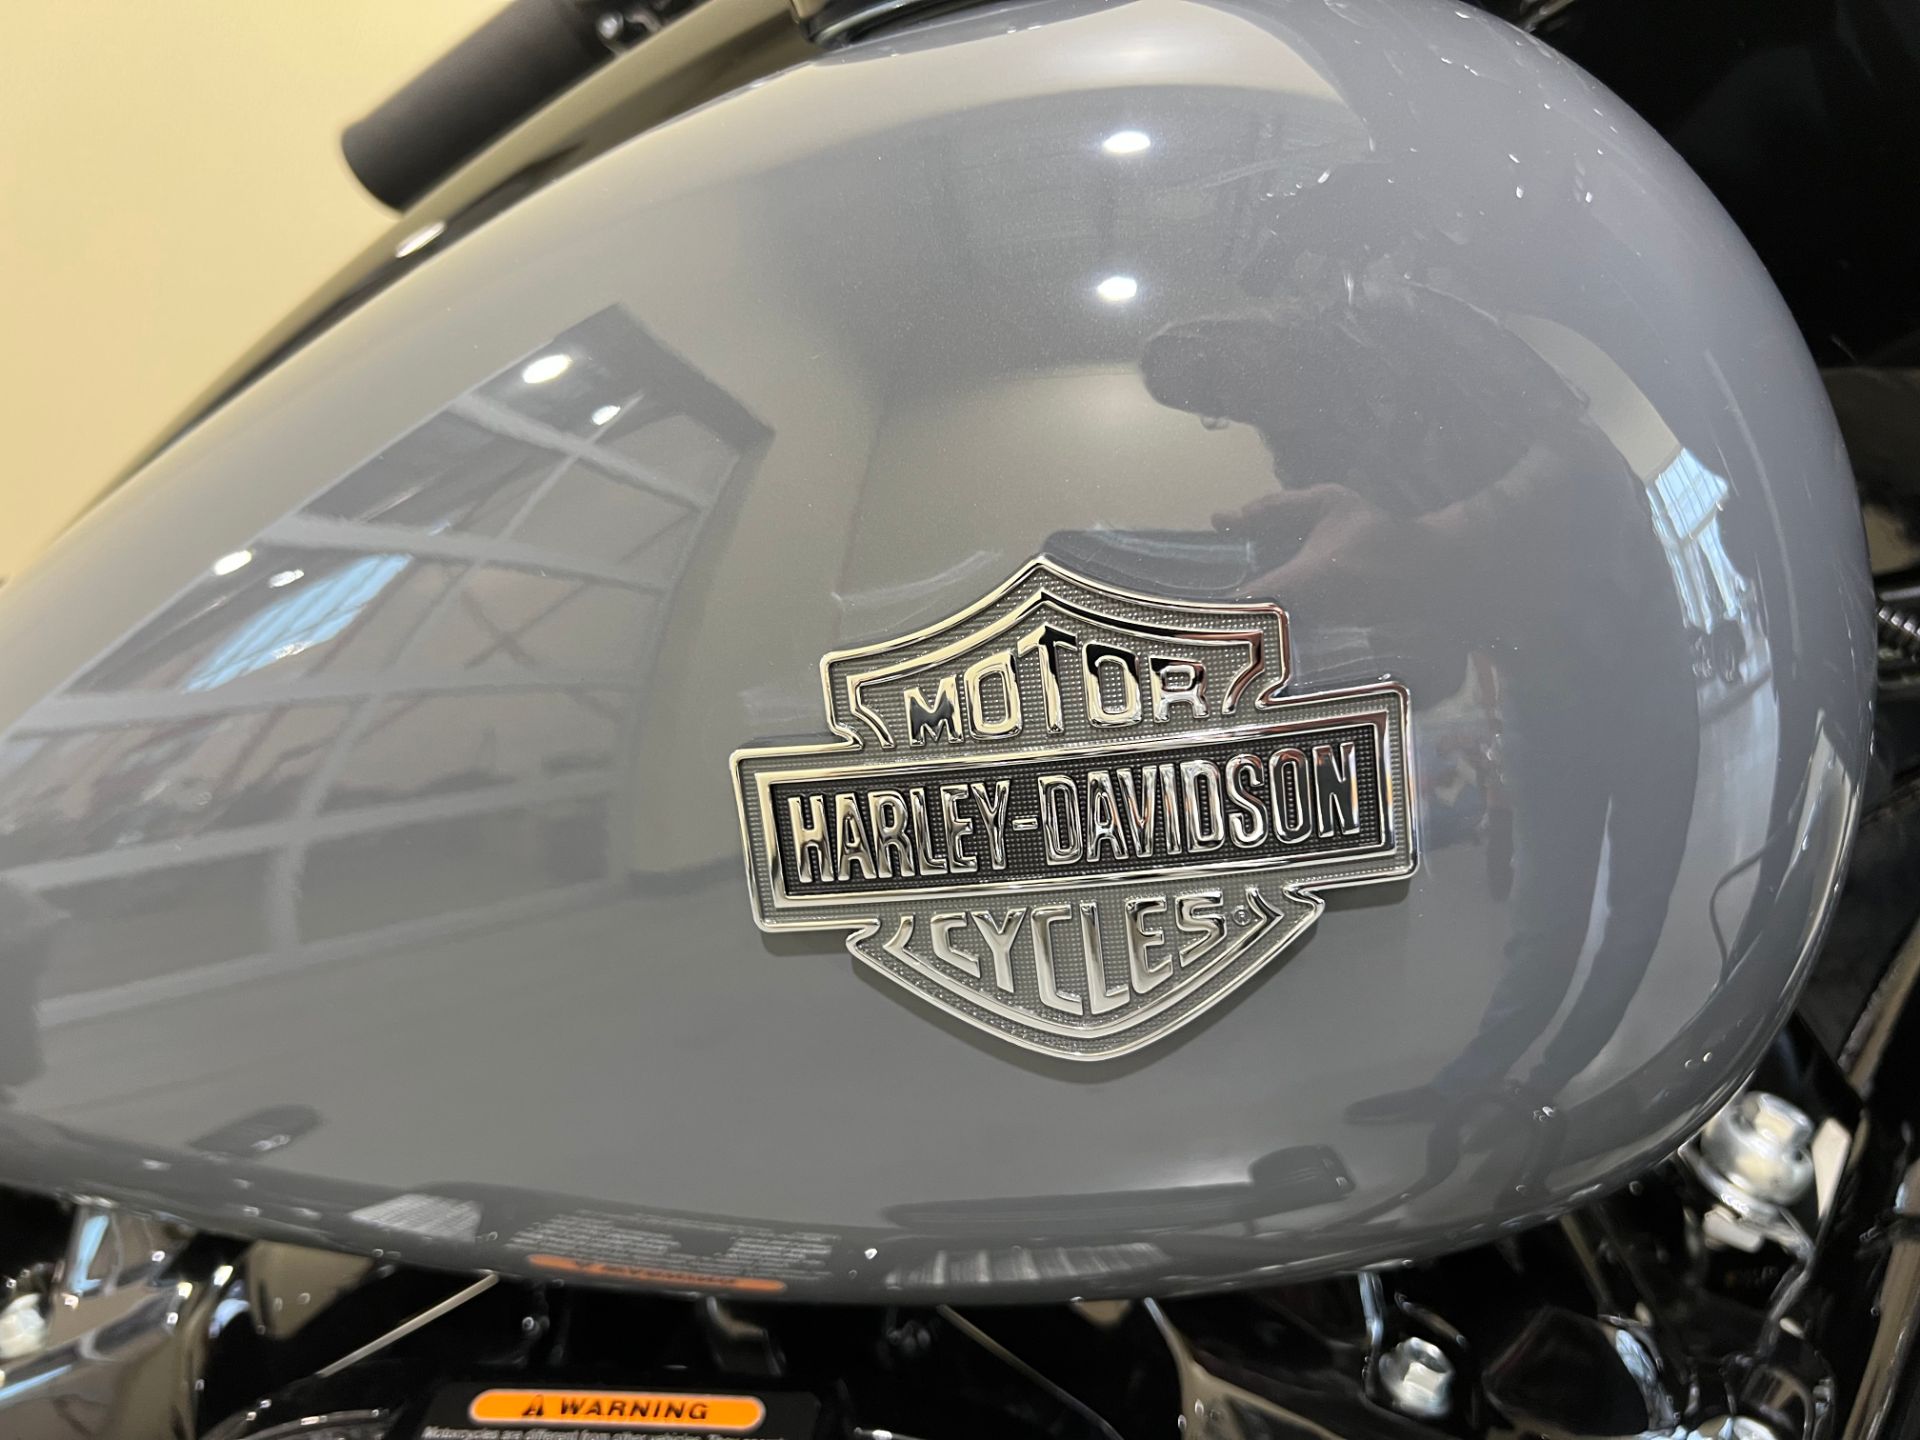 2022 Harley-Davidson Street Glide® Special in Logan, Utah - Photo 2